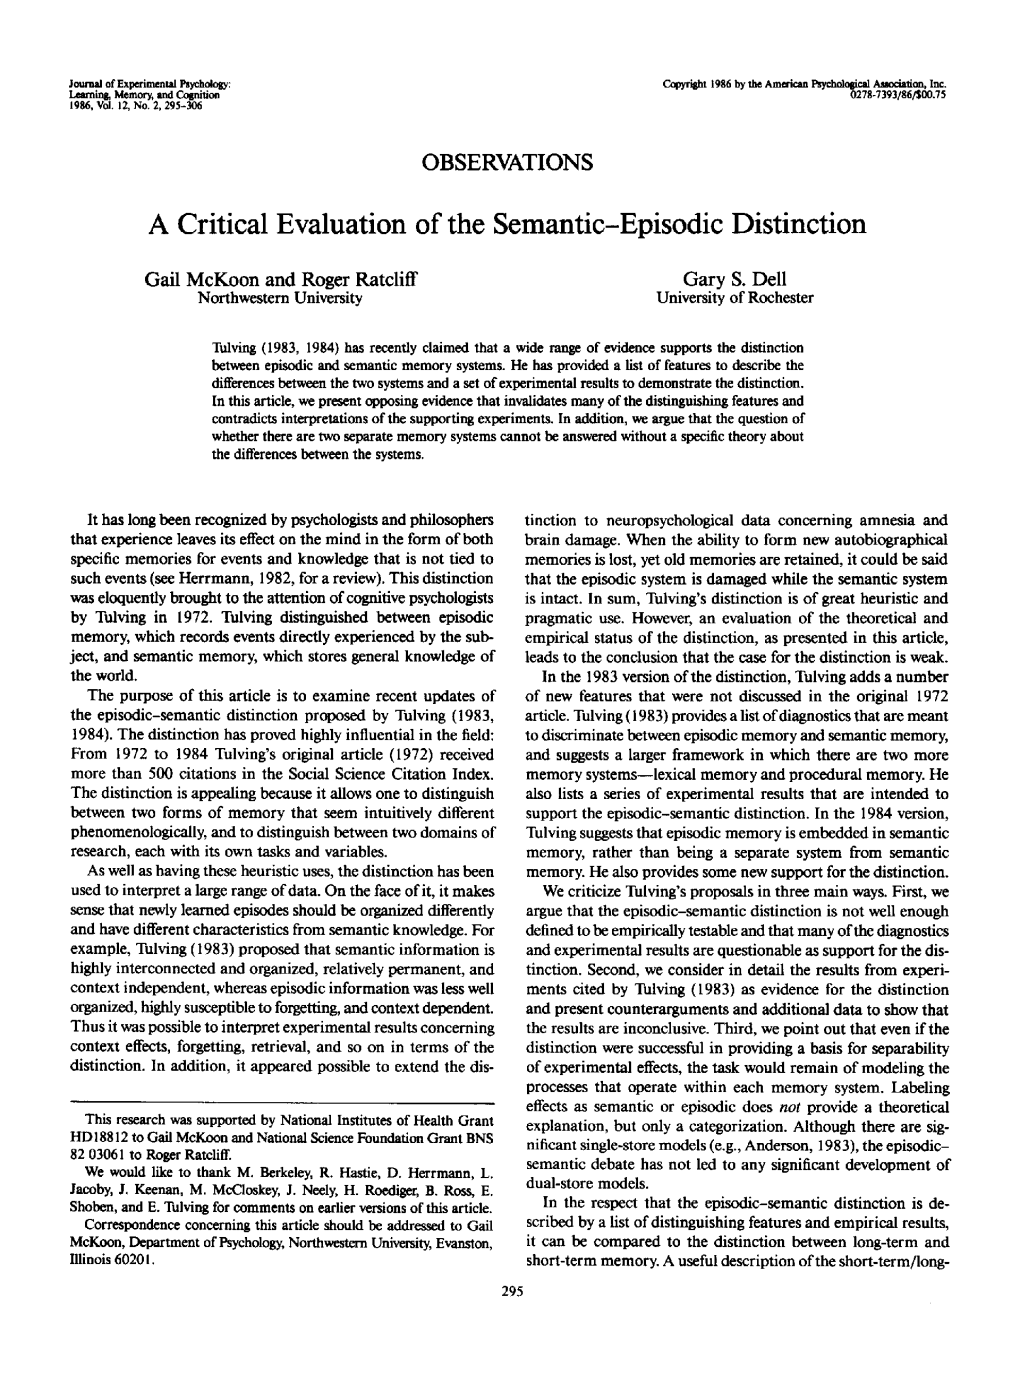 A Critical Evaluation of the Semantic-Episodic Distinction